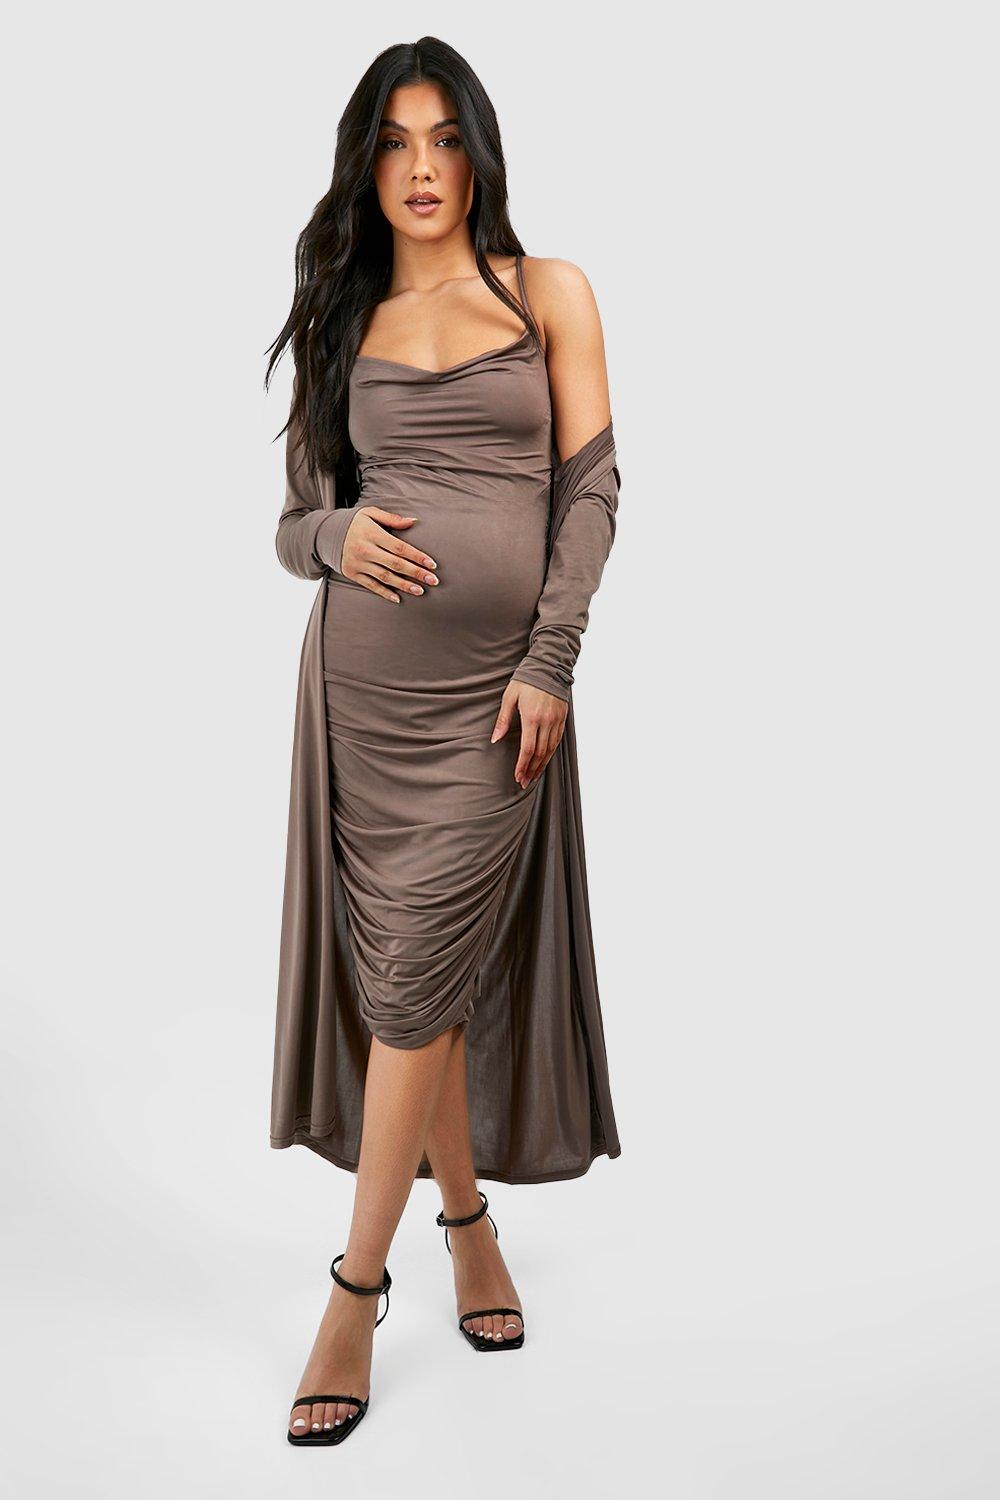 Maternity Dresses | Maternity Summer ...